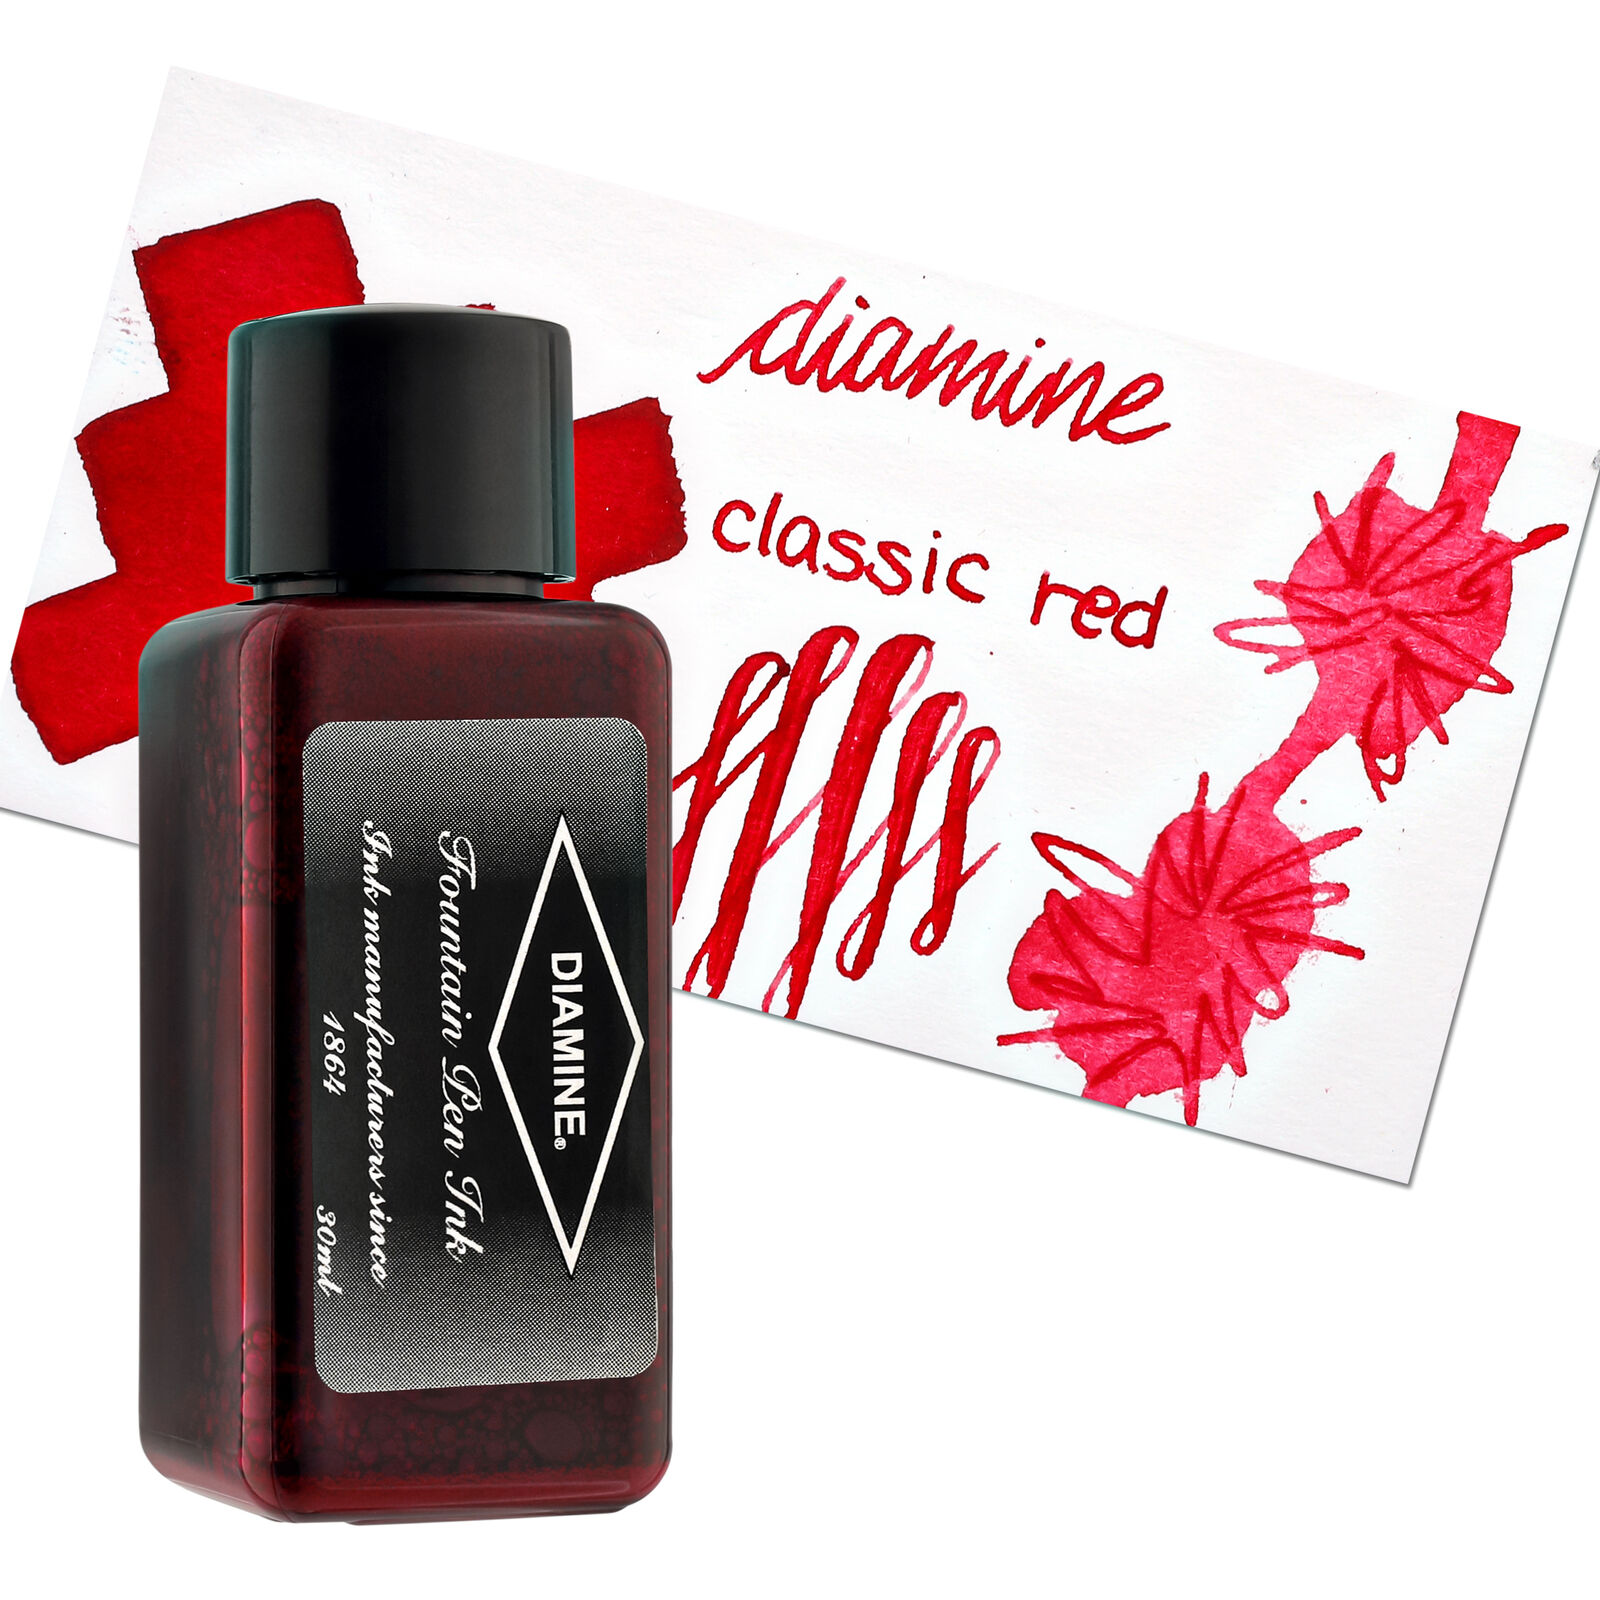 Diamine Classic Red Bottled Ink For Fountain Pens New 30 ml DM-3060